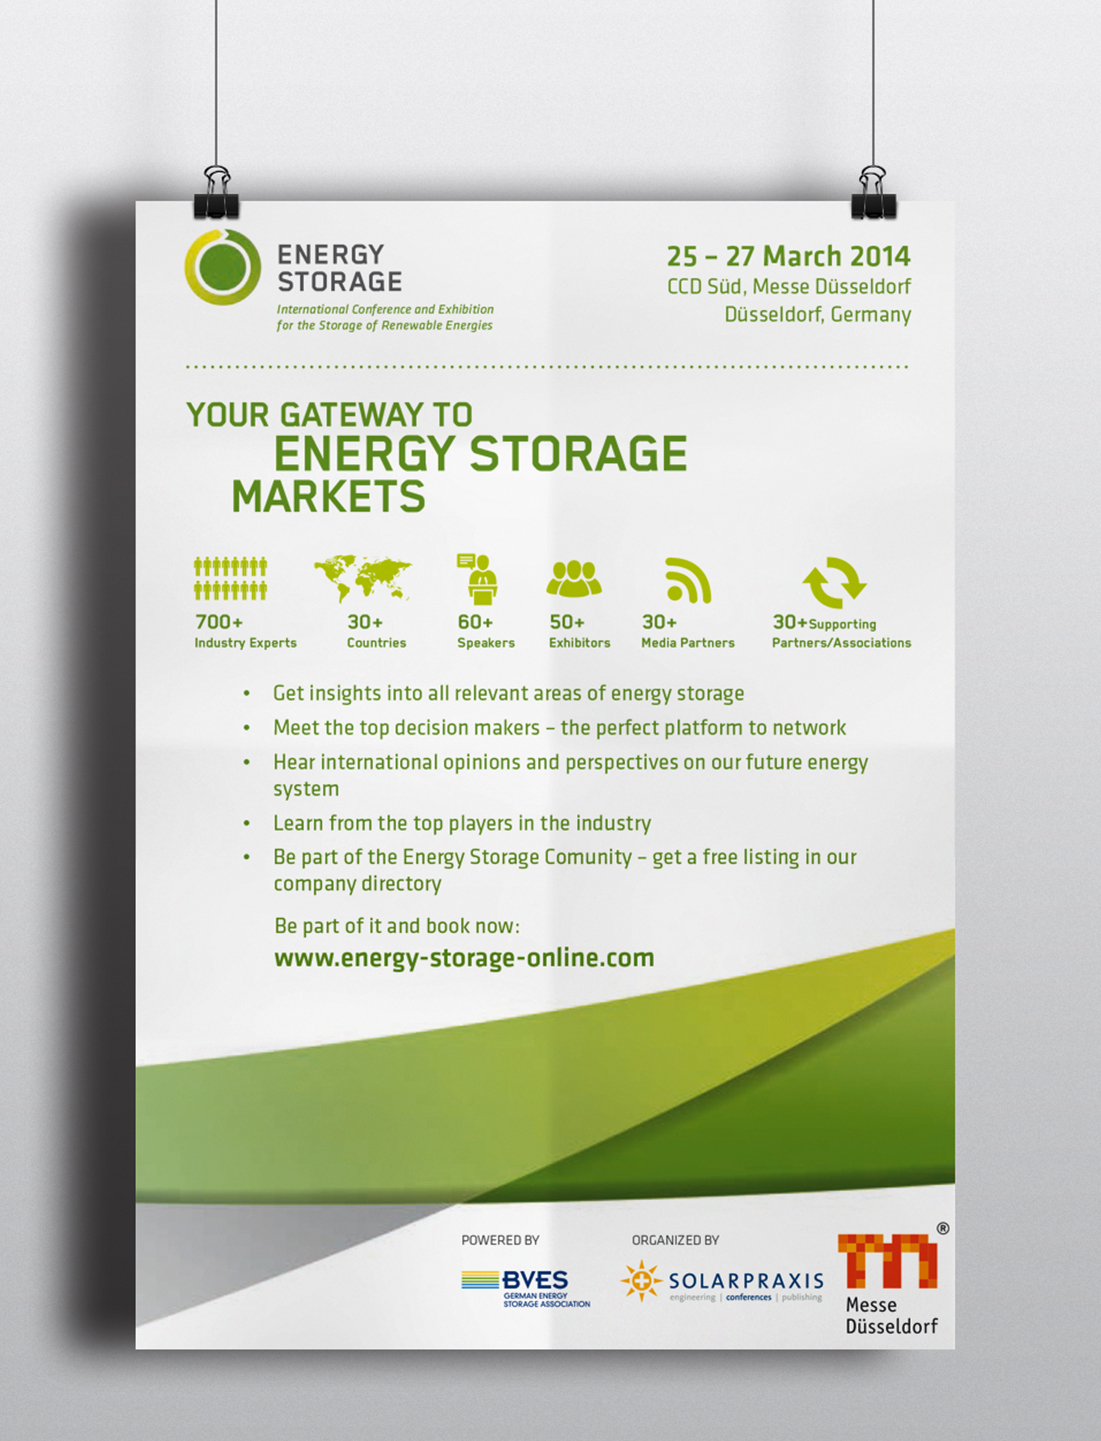 messe düsseldorf conference Exhibition  green energy print